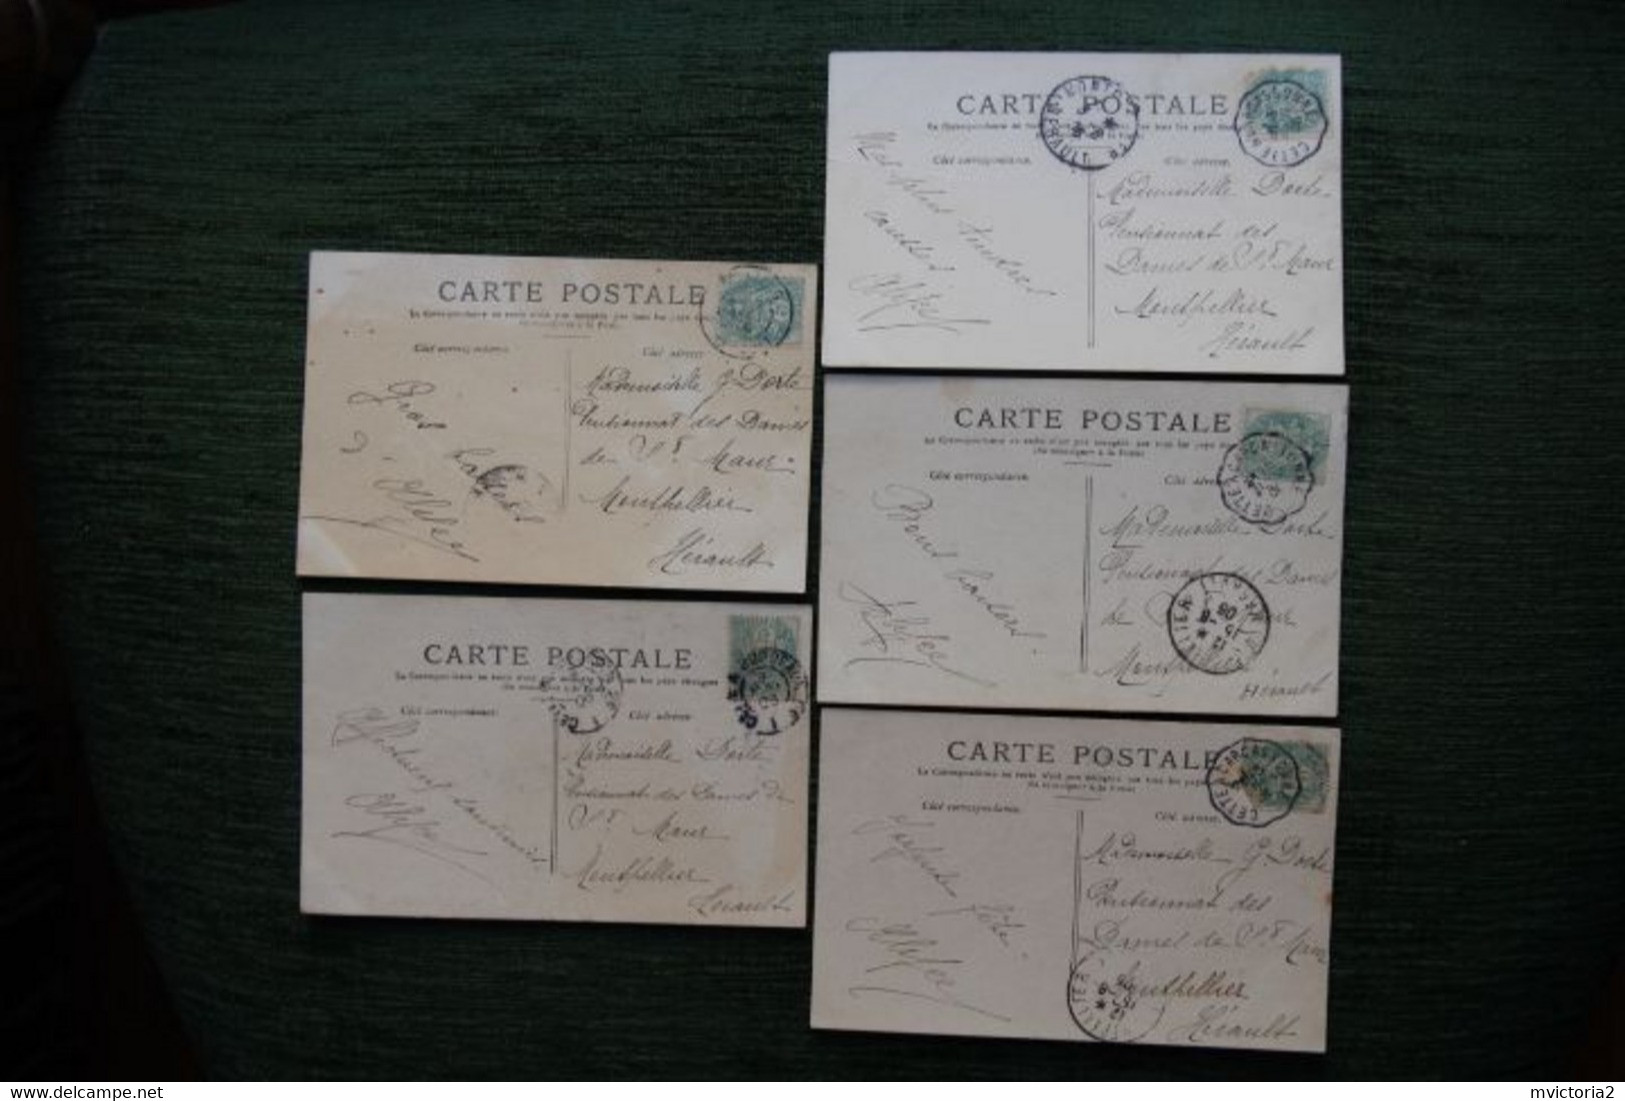 Série de 5 cartes Postales : L'OREILLER